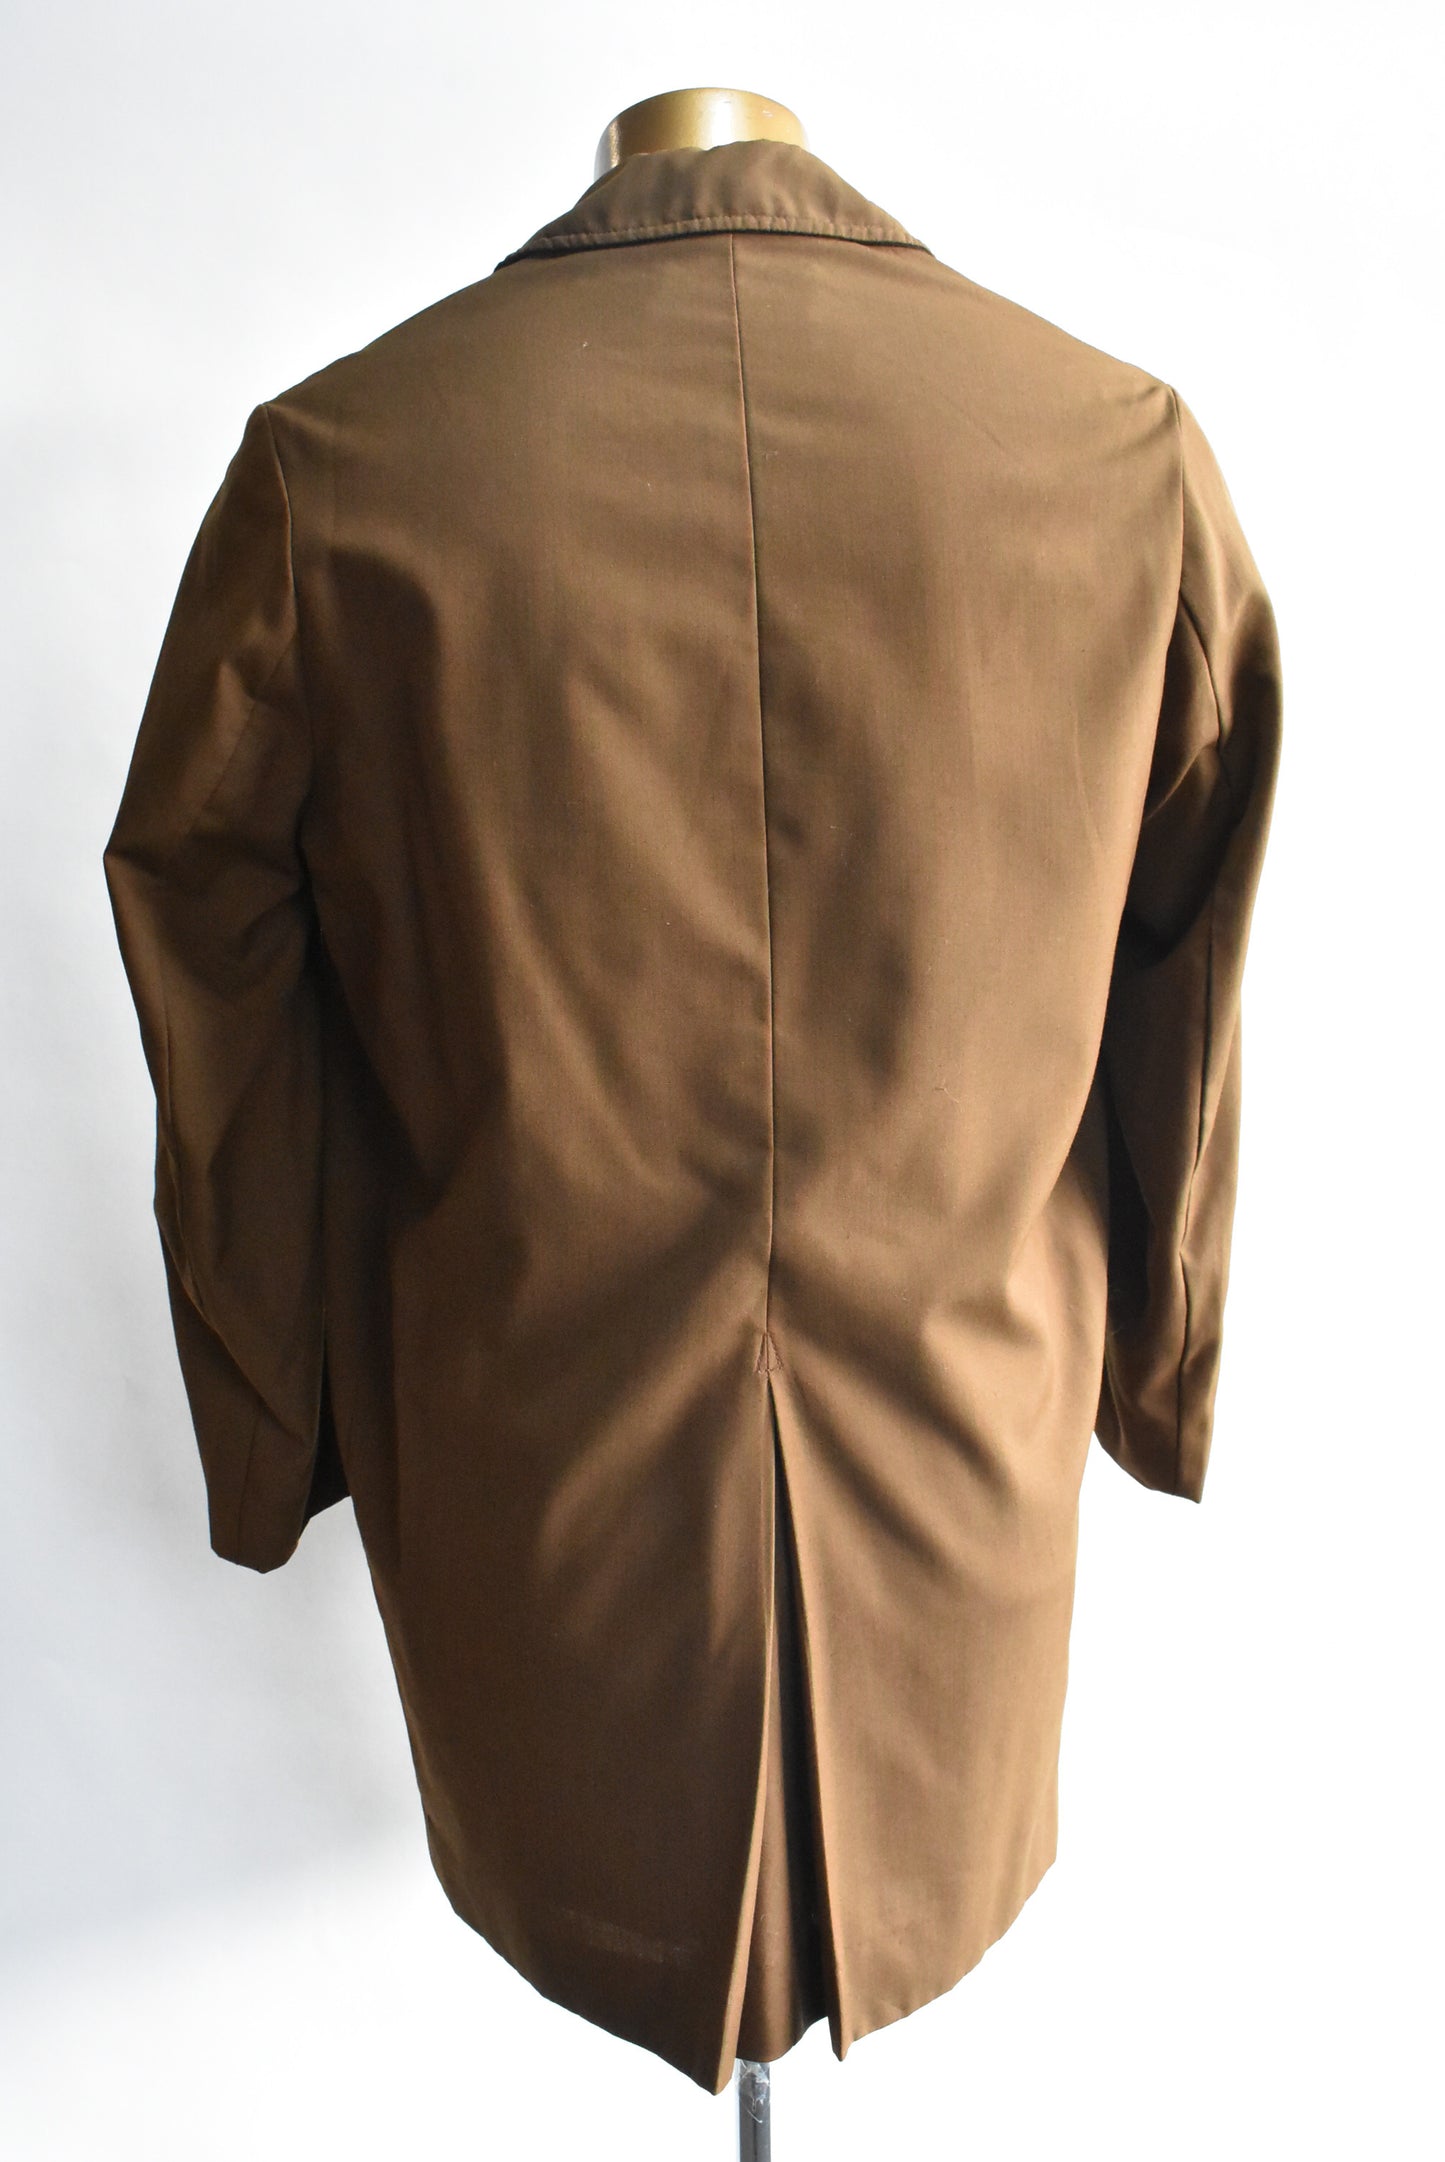 Klipper retro men's lined coat, made in NZ, 36